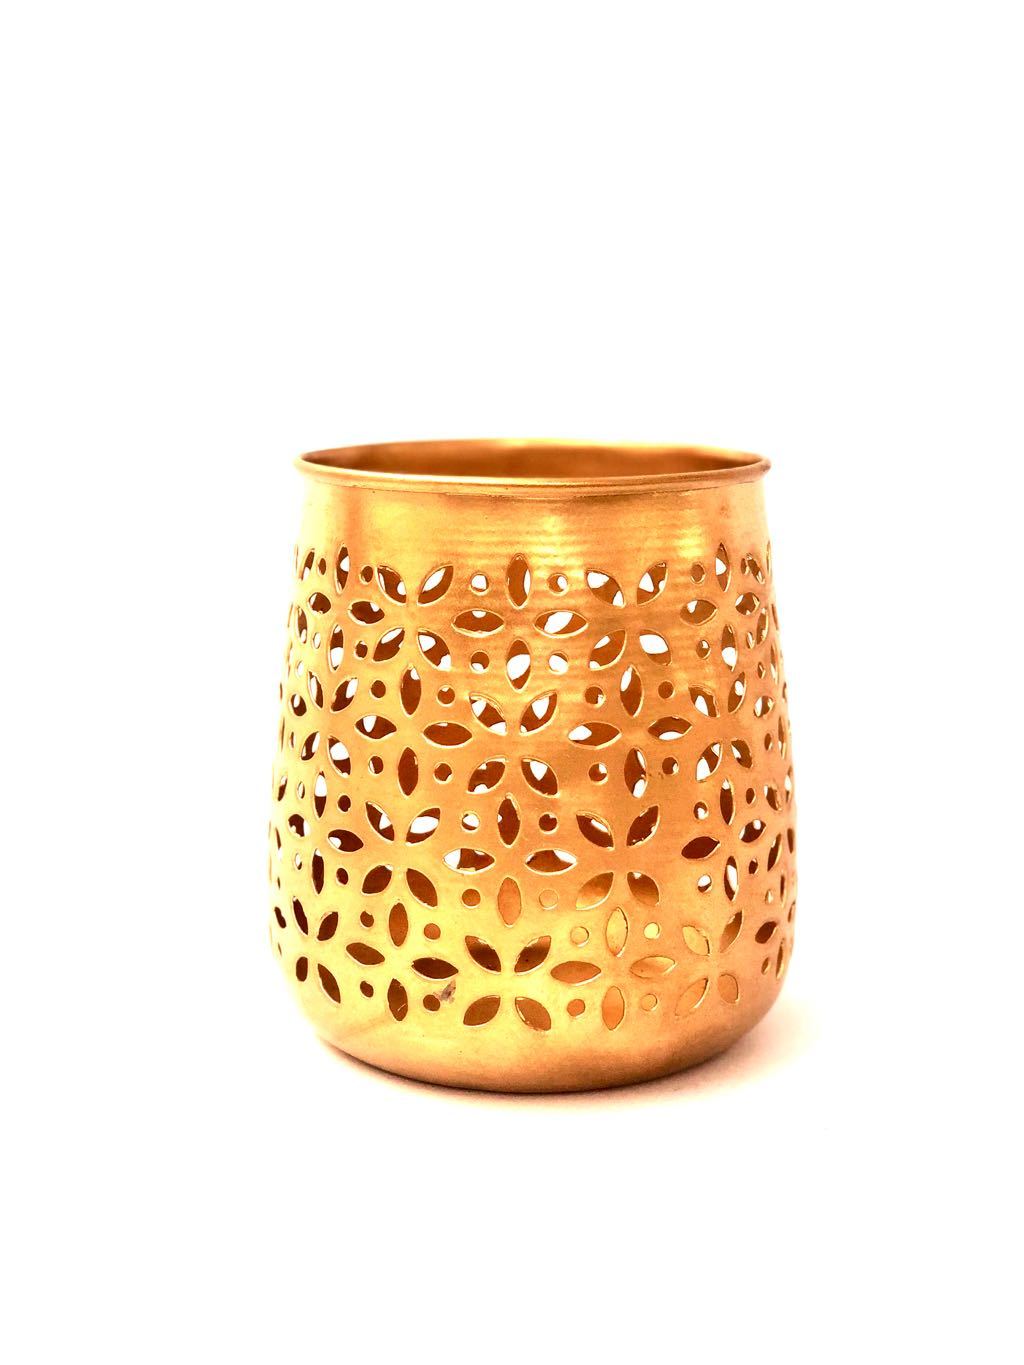 Metal Flower Carved Votive Gold Candle Holder Creations Tamrapatra - Tamrapatra